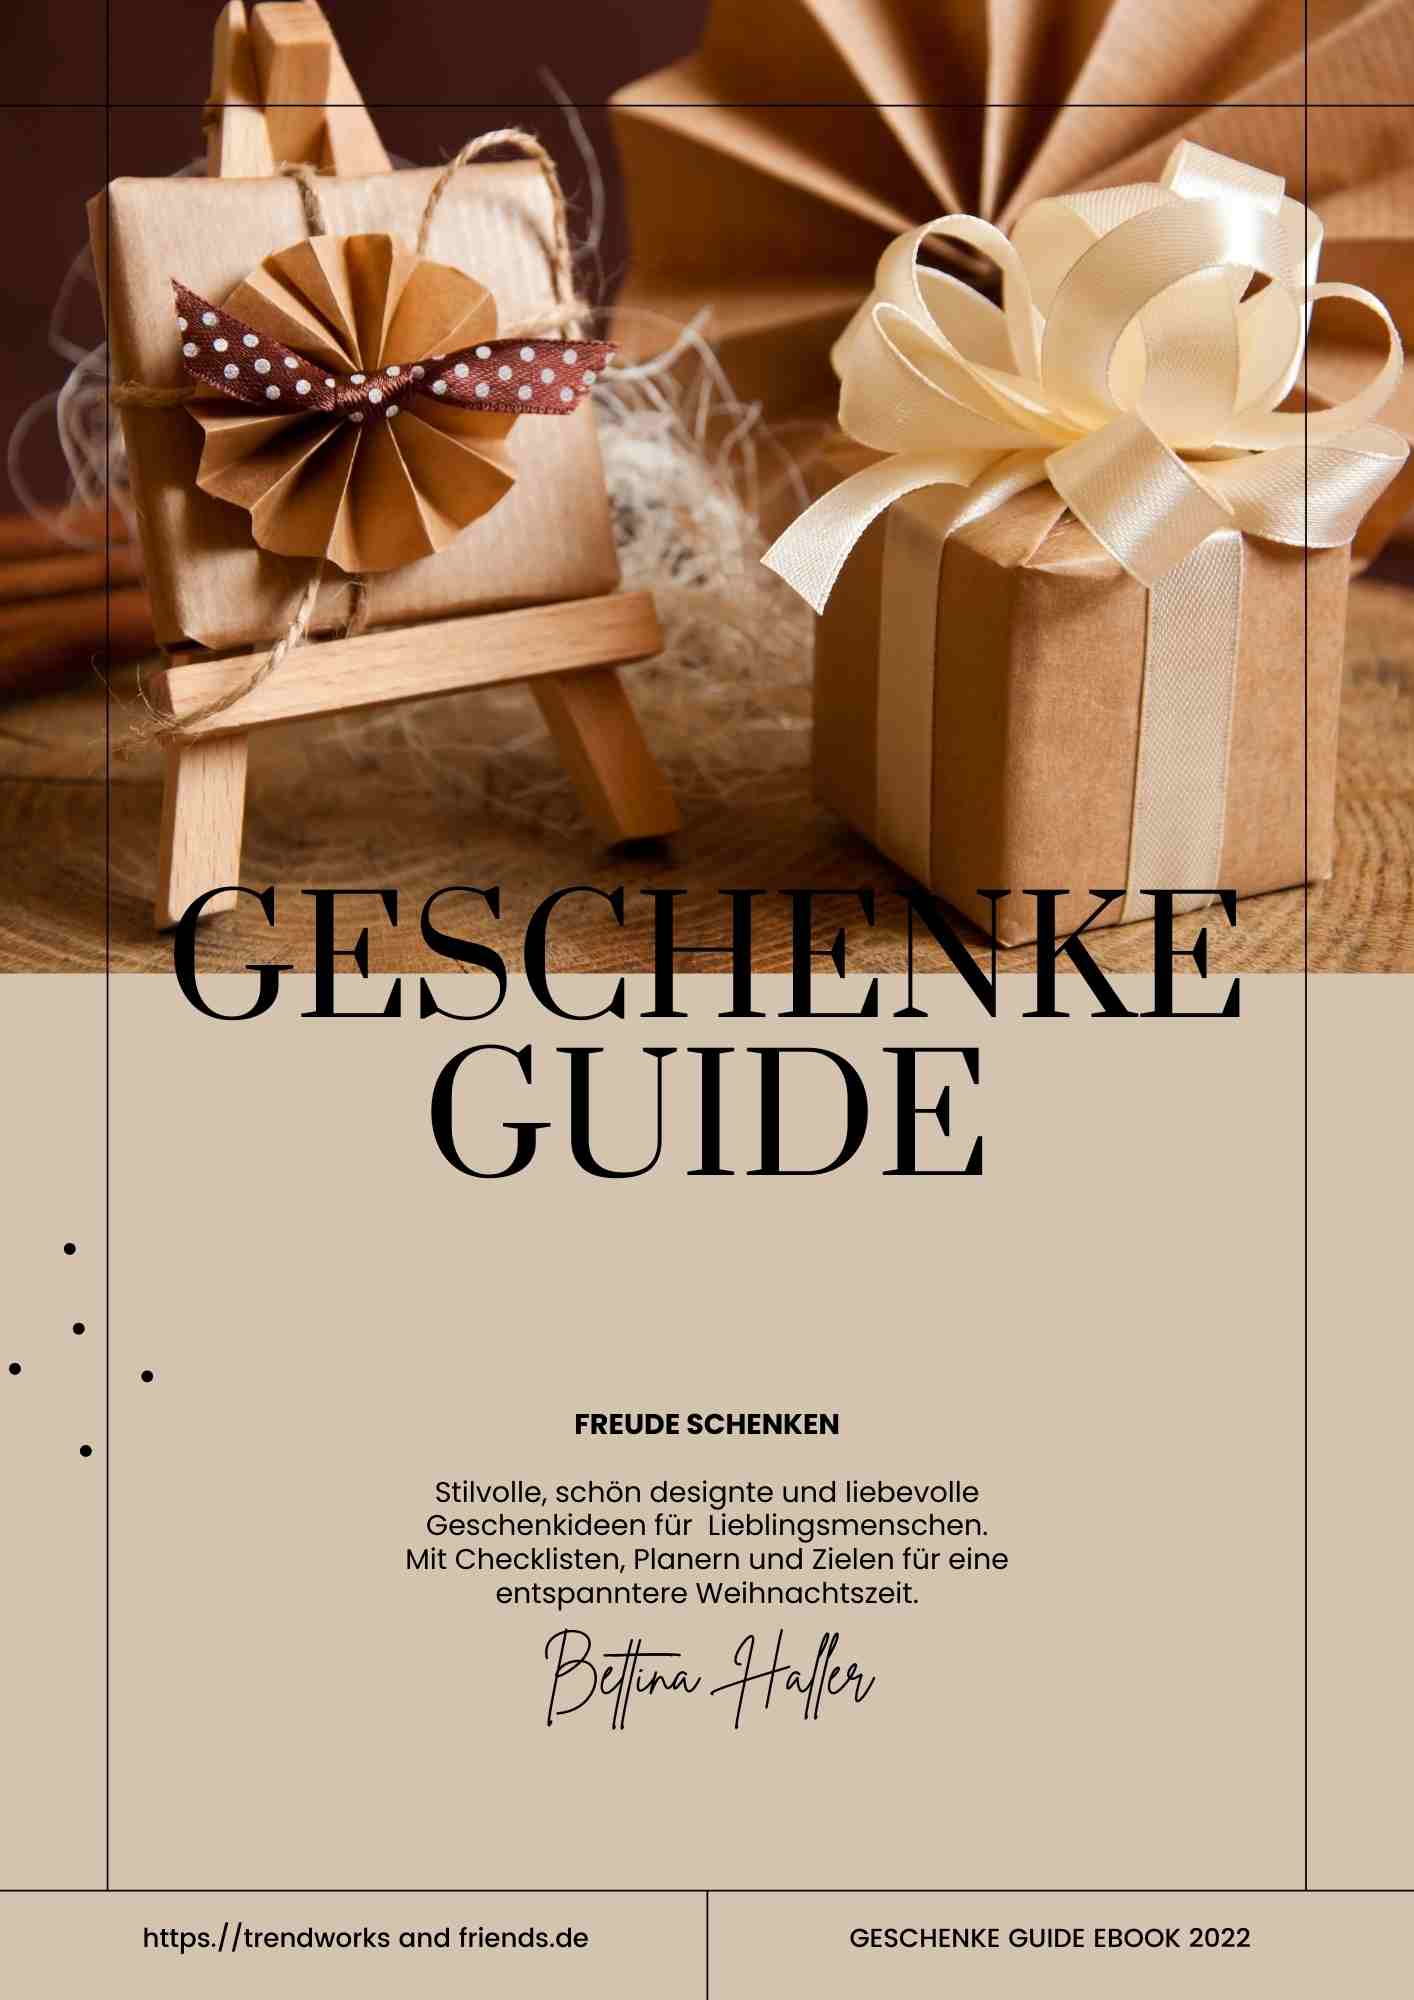 Geschenke Guide 2022